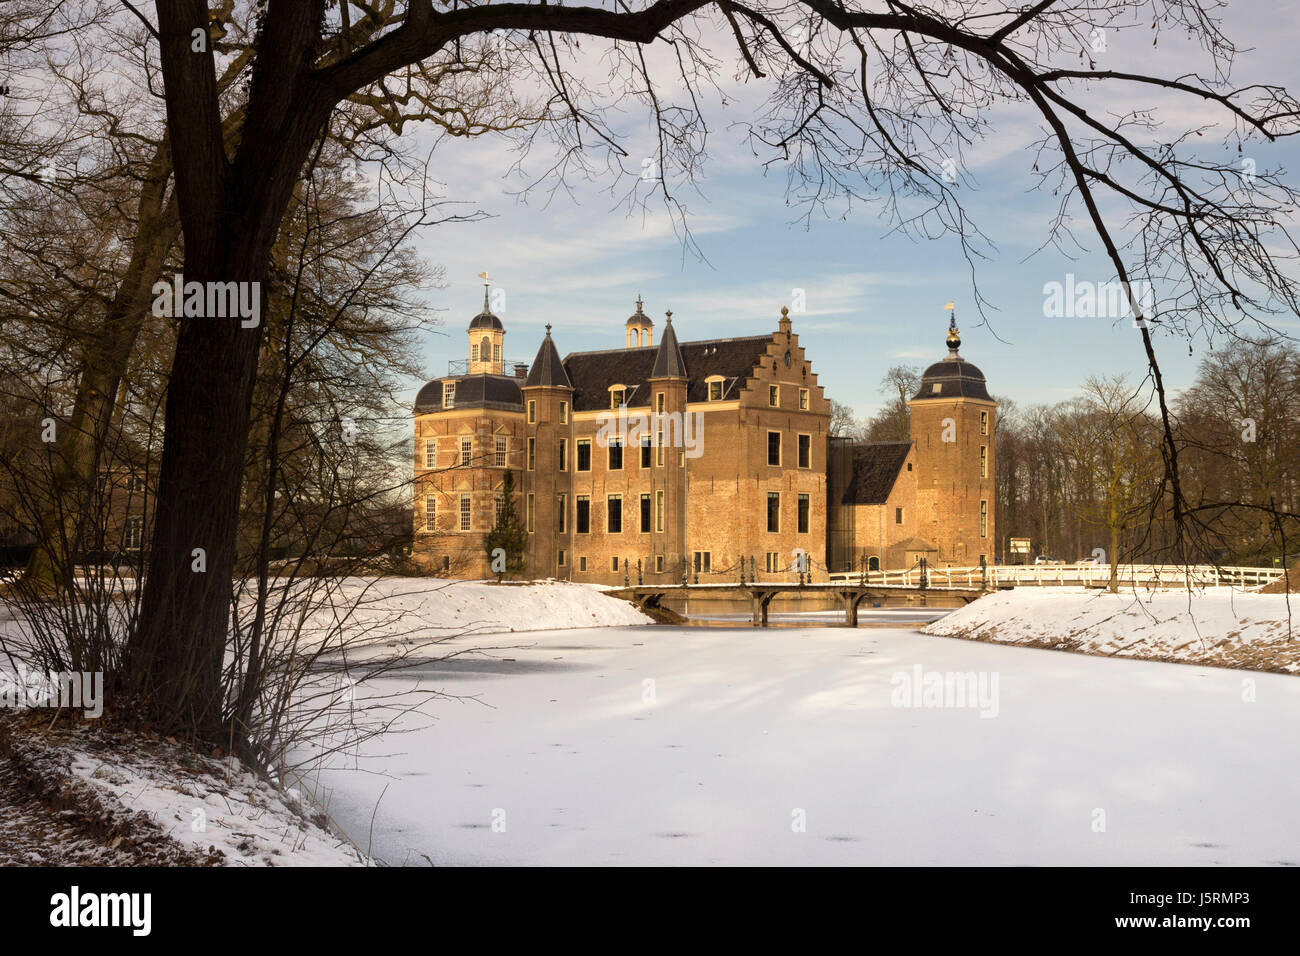 Ruurlo castle in the Dutch region Achterhoek seen from the surrounding wintry park Stock Photo